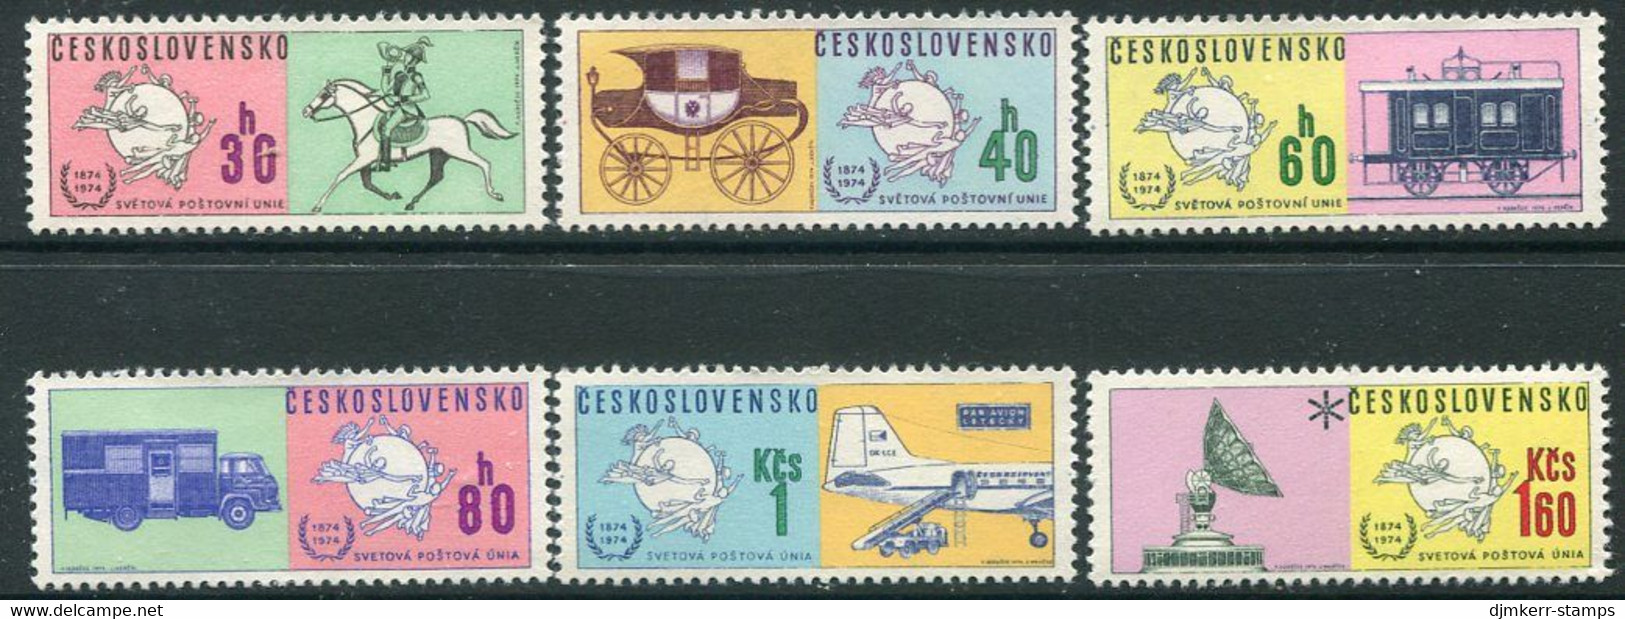 CZECHOSLOVAKIA 1974 Universal Postal Union MNH / **  Michel 2222-27 - Nuevos